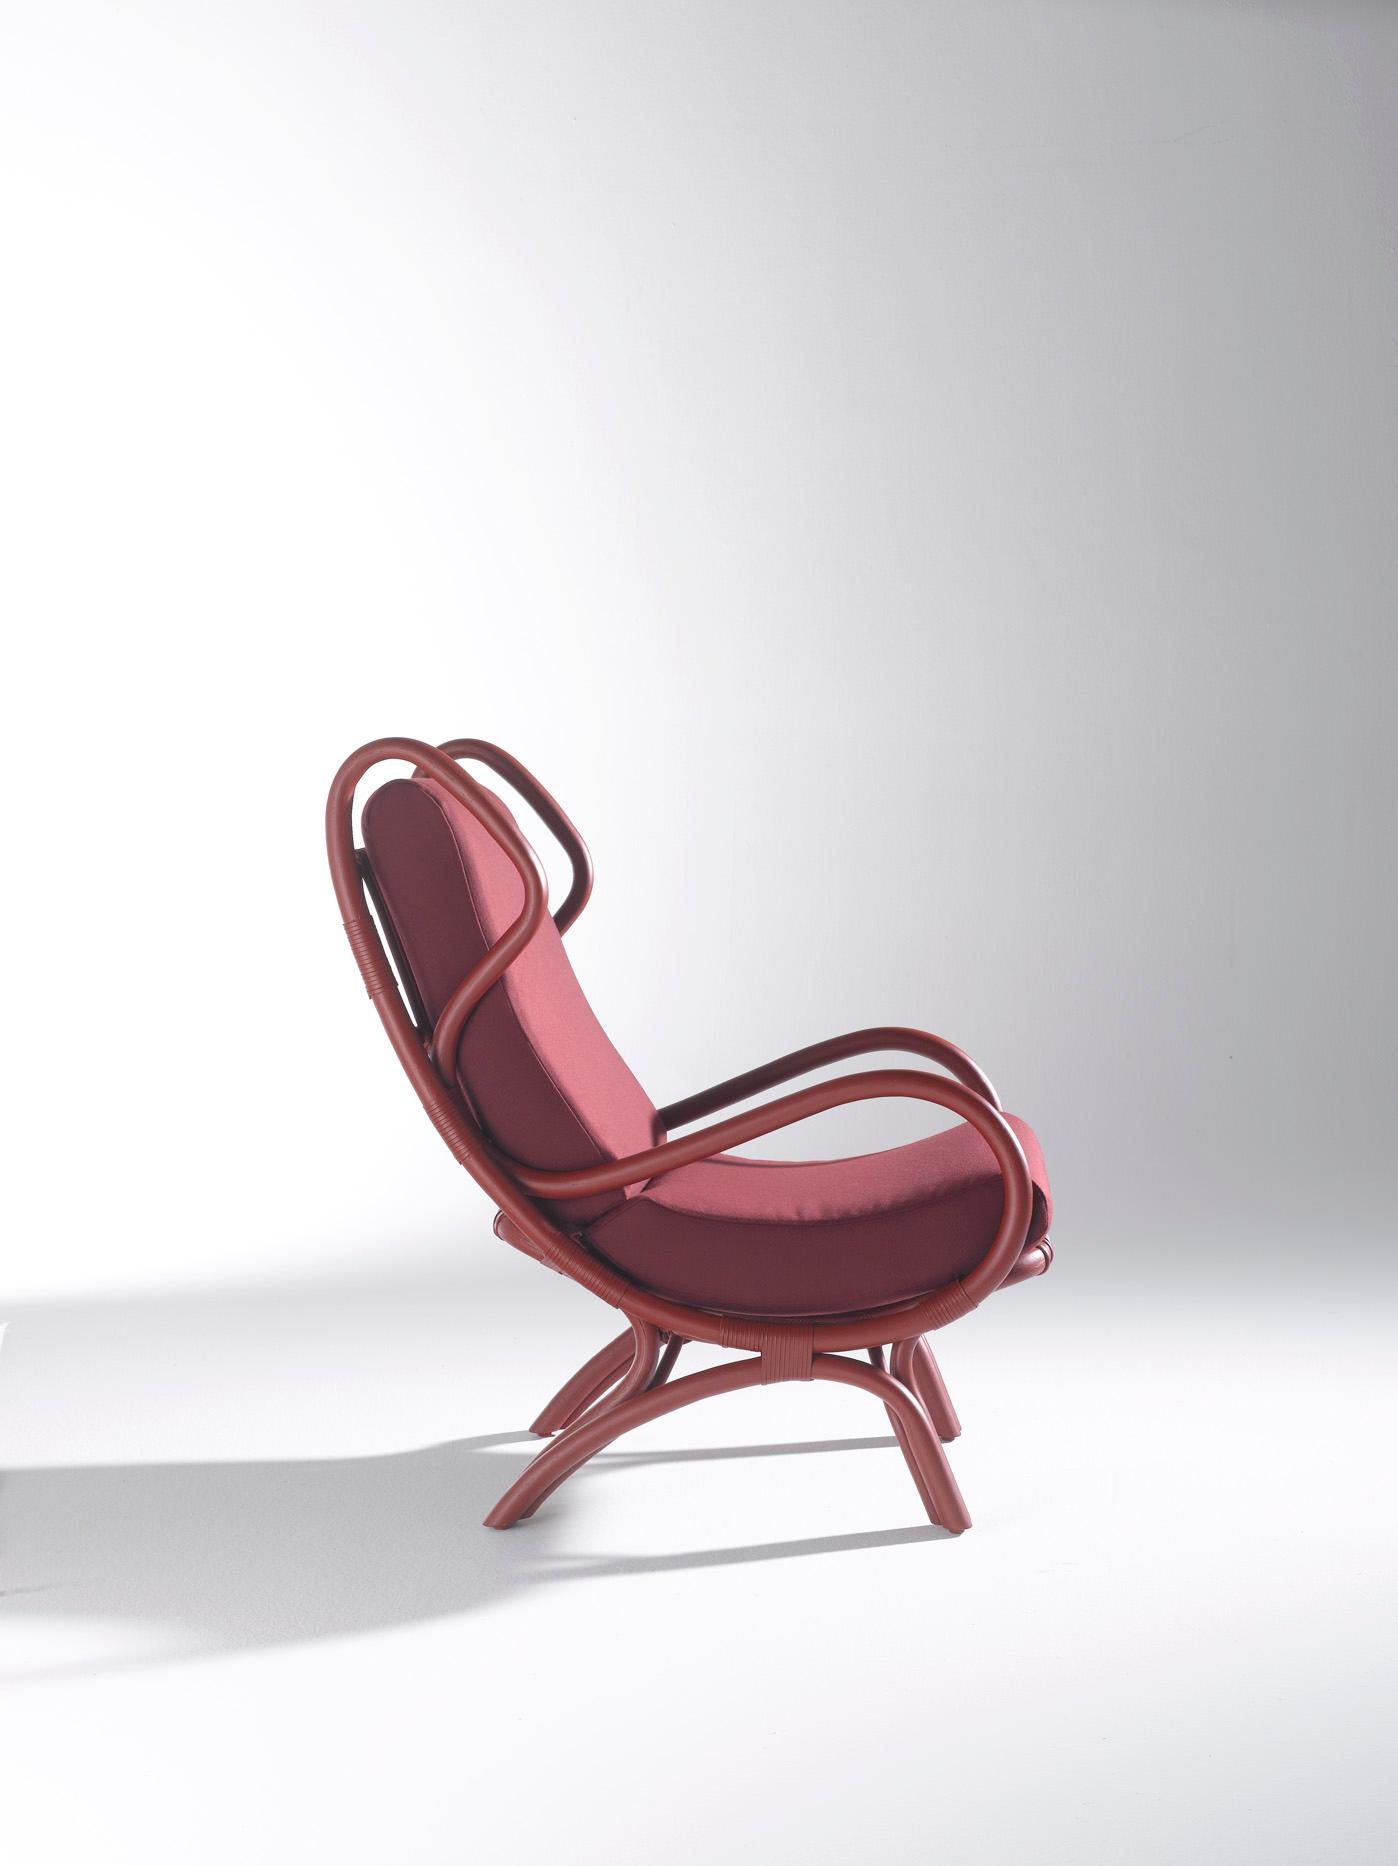 Italian Bonacina1889 Continuum Indoor Armchair Rattan, Upholstered, Gio Ponti For Sale